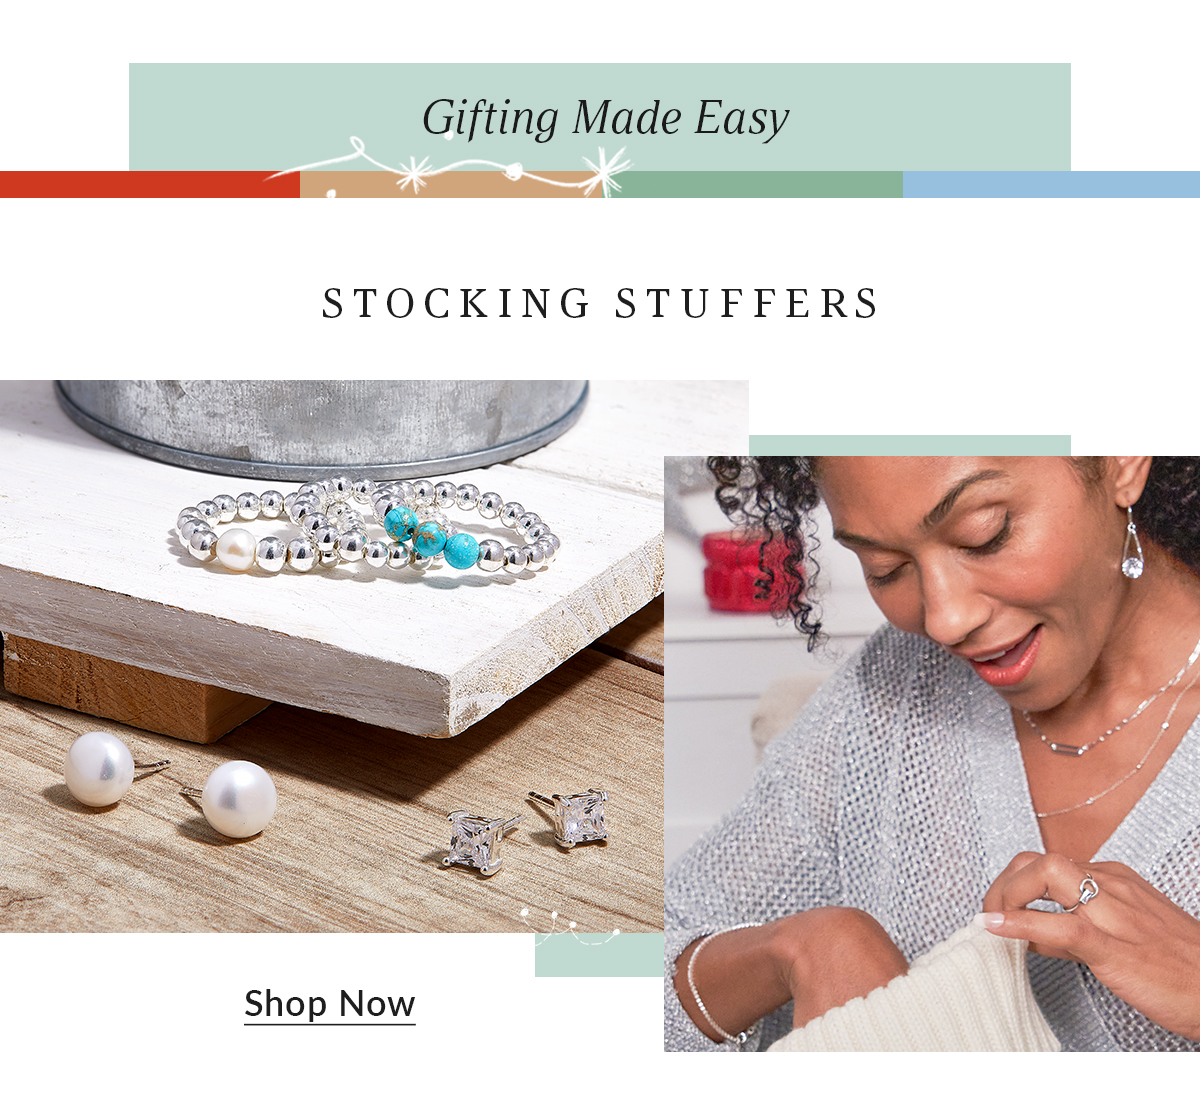 Gifting Made Easy: Stocking Stuffers